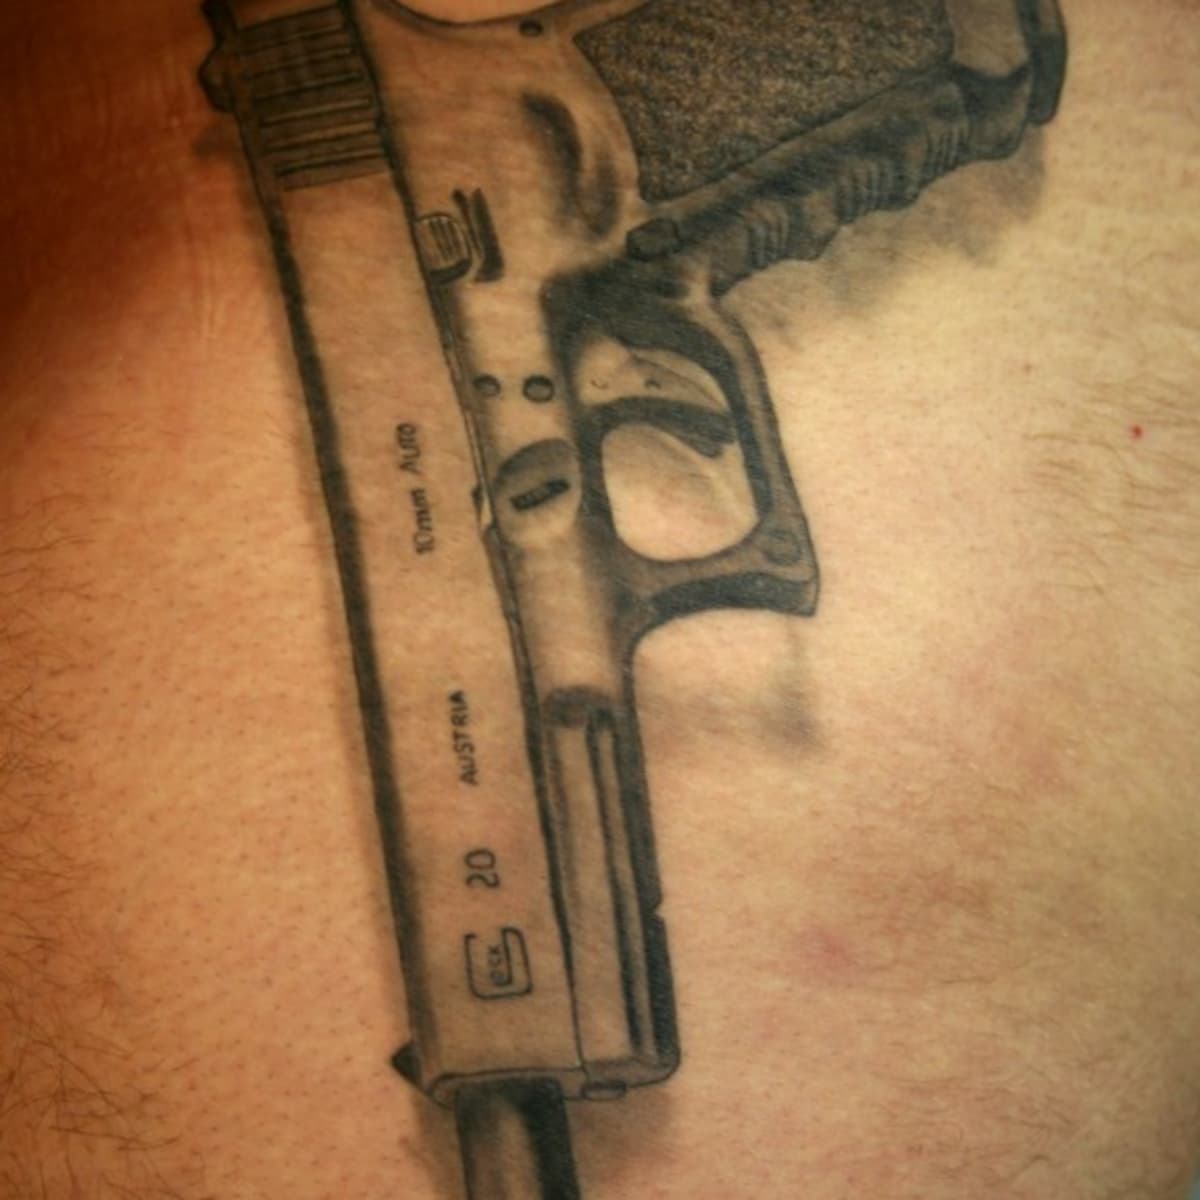 Gun Tattoos Follow Super Tattoo Ideas for more  Super Tattoo Ideas